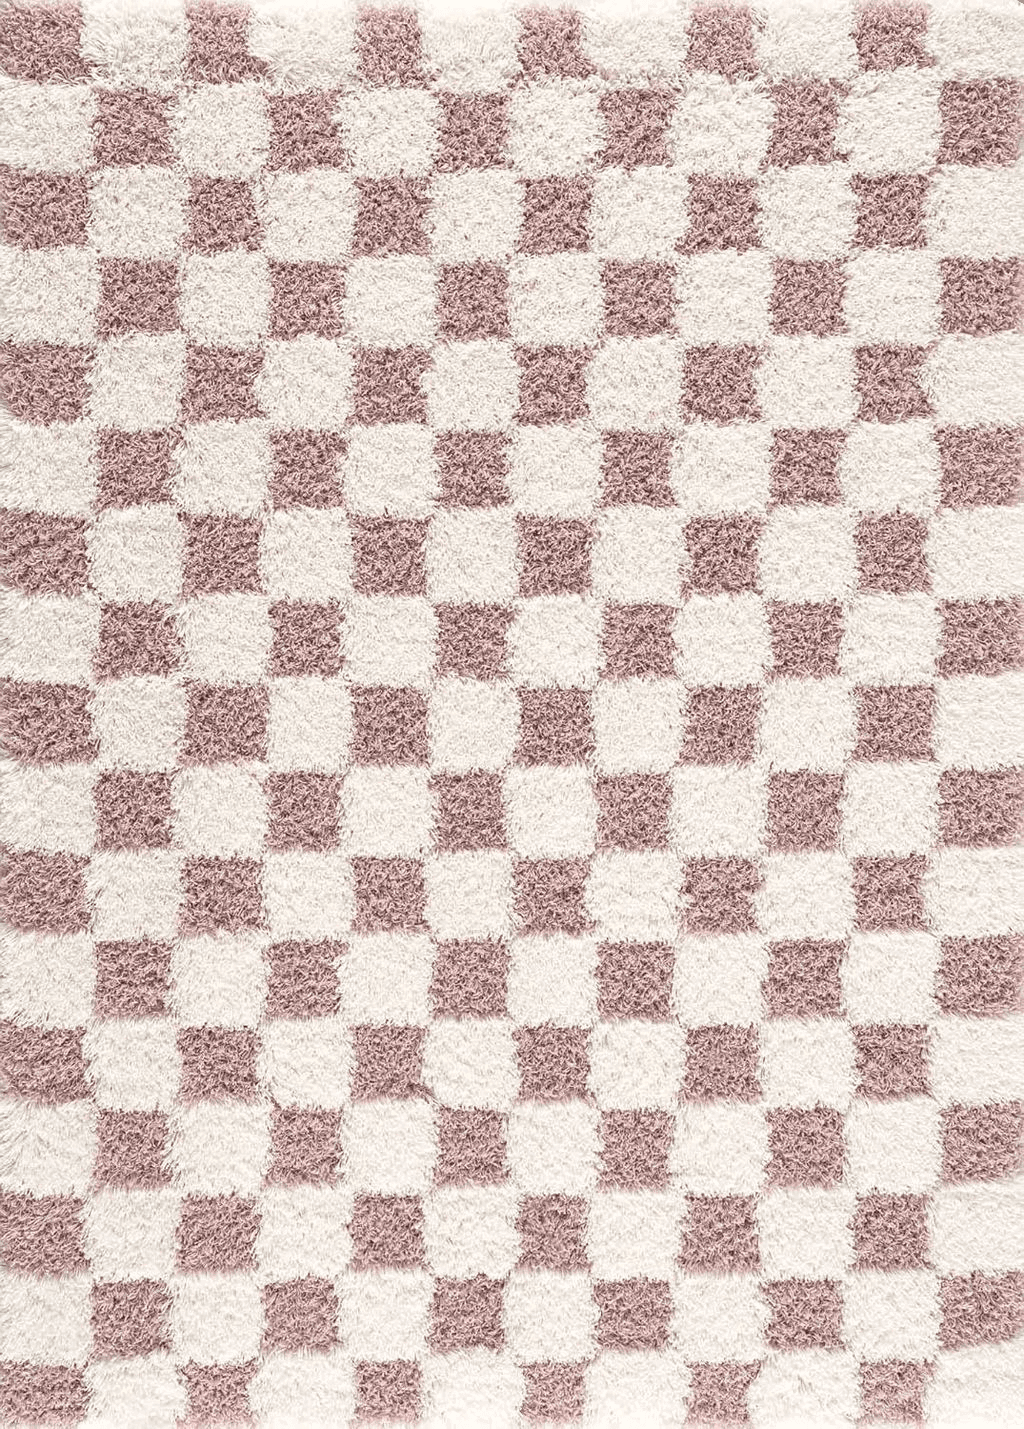 Hauteloom Atira Checkered Shag Area Rug - Checkboard Design - High Pile Fluffy Shaggy Touch - Square Tiles - Kids Room, Nursery, Living Room Shaggy Carpet - Pink, Cream, White - 6'7" X 9'6"